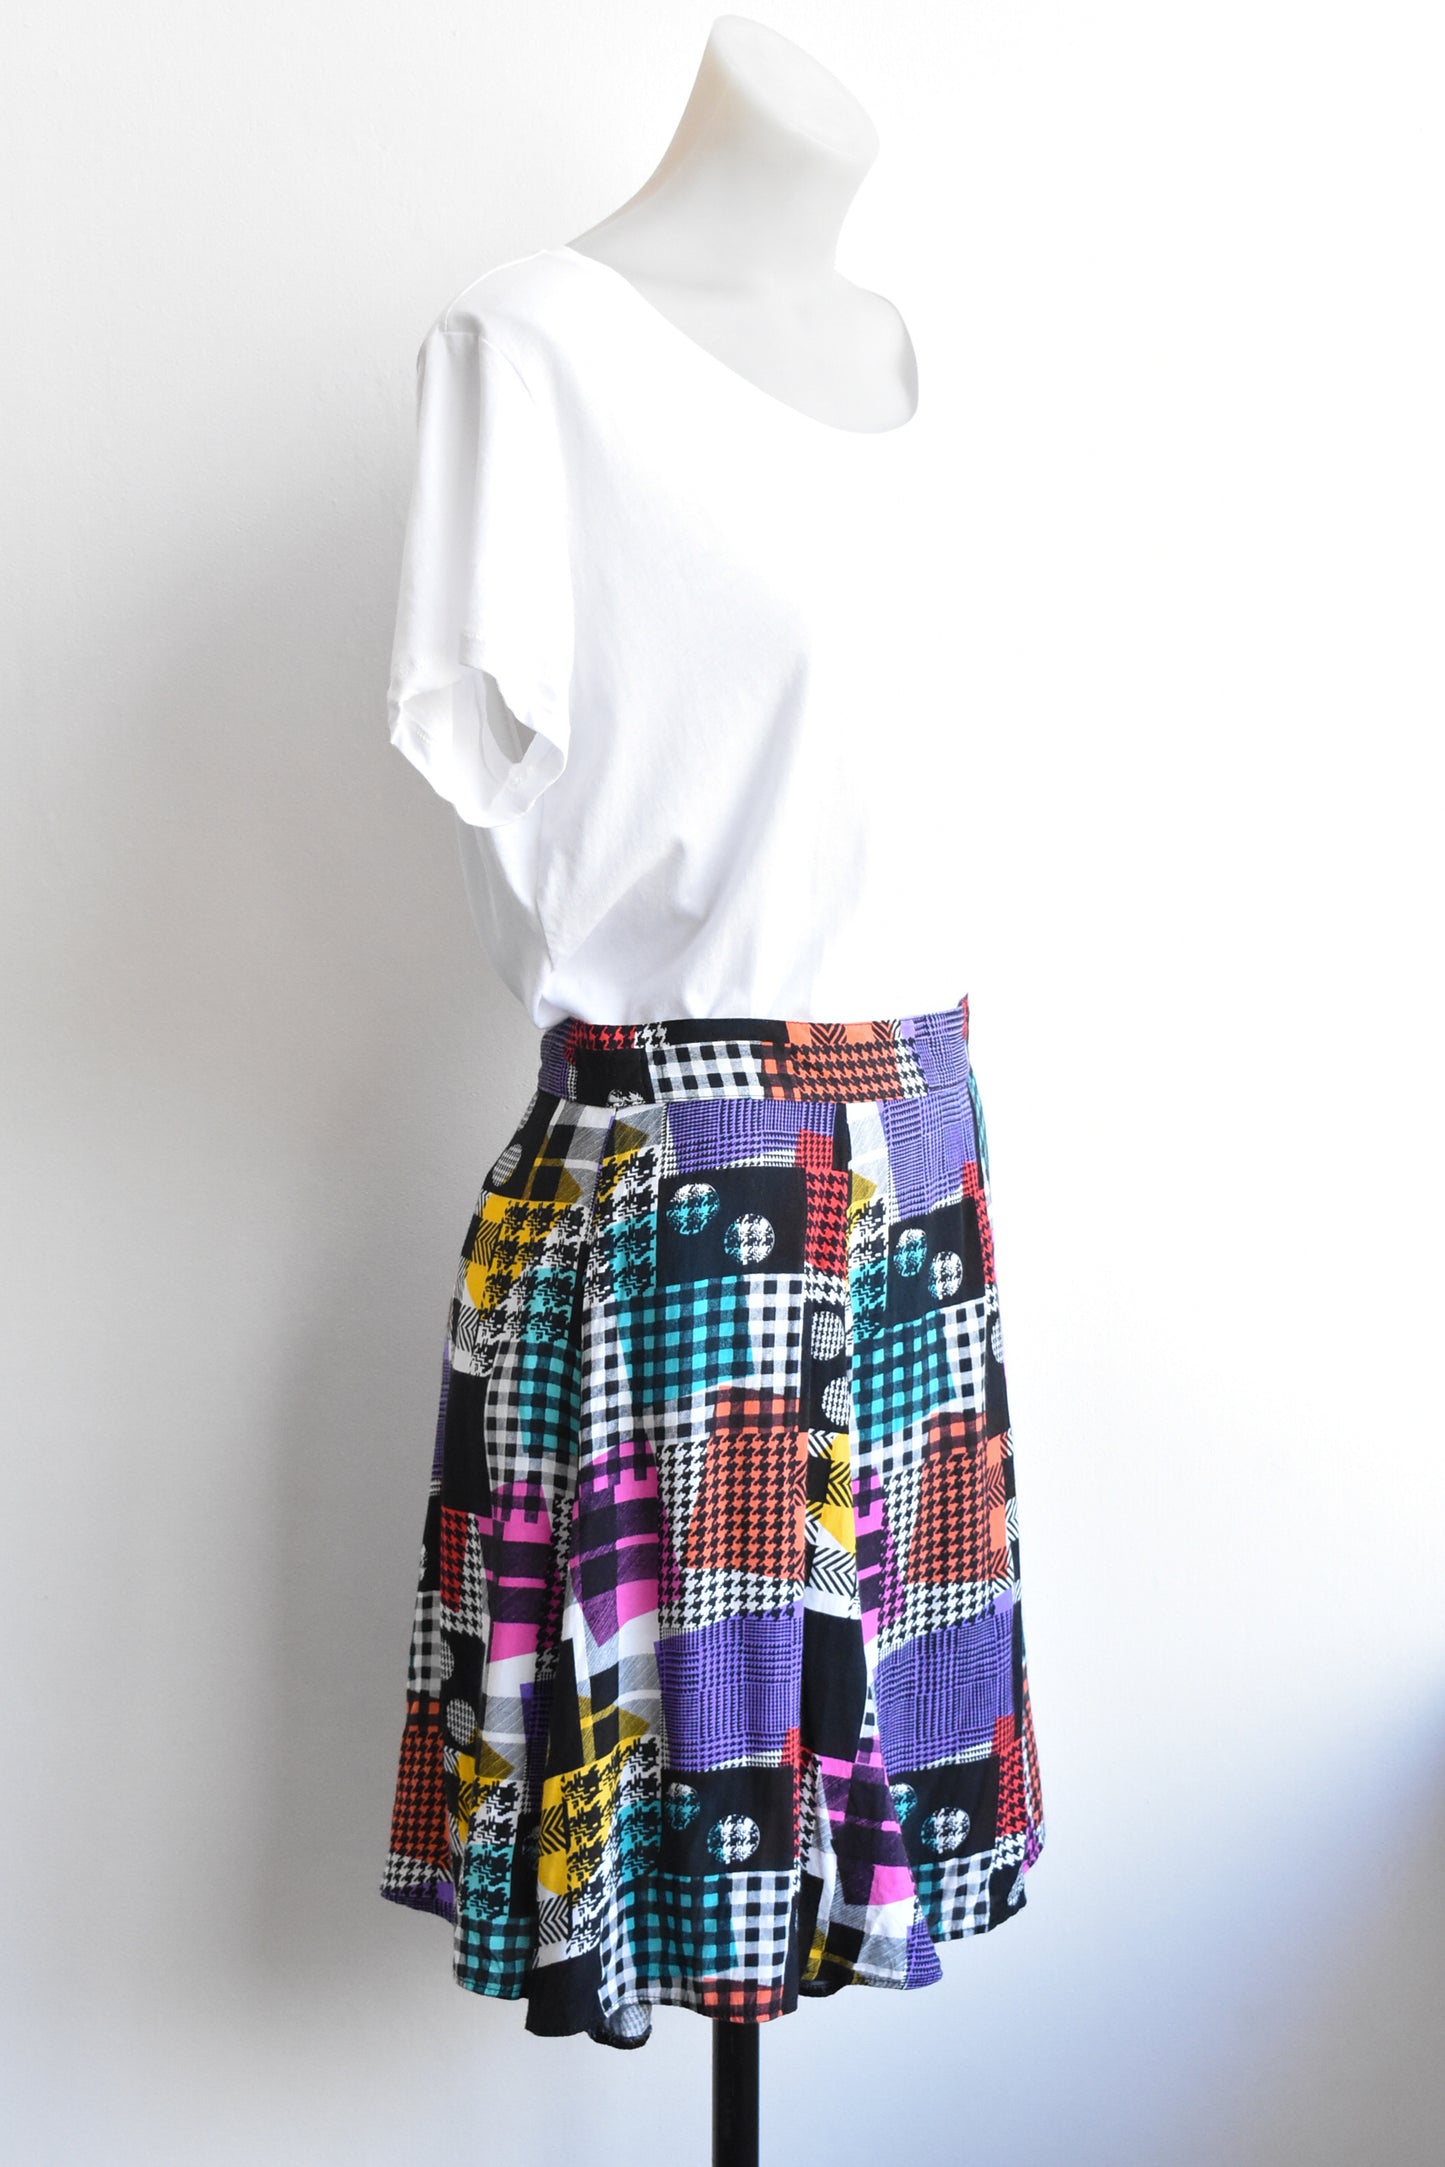 Warehouse 14 multi-patterned mini skirt, size S